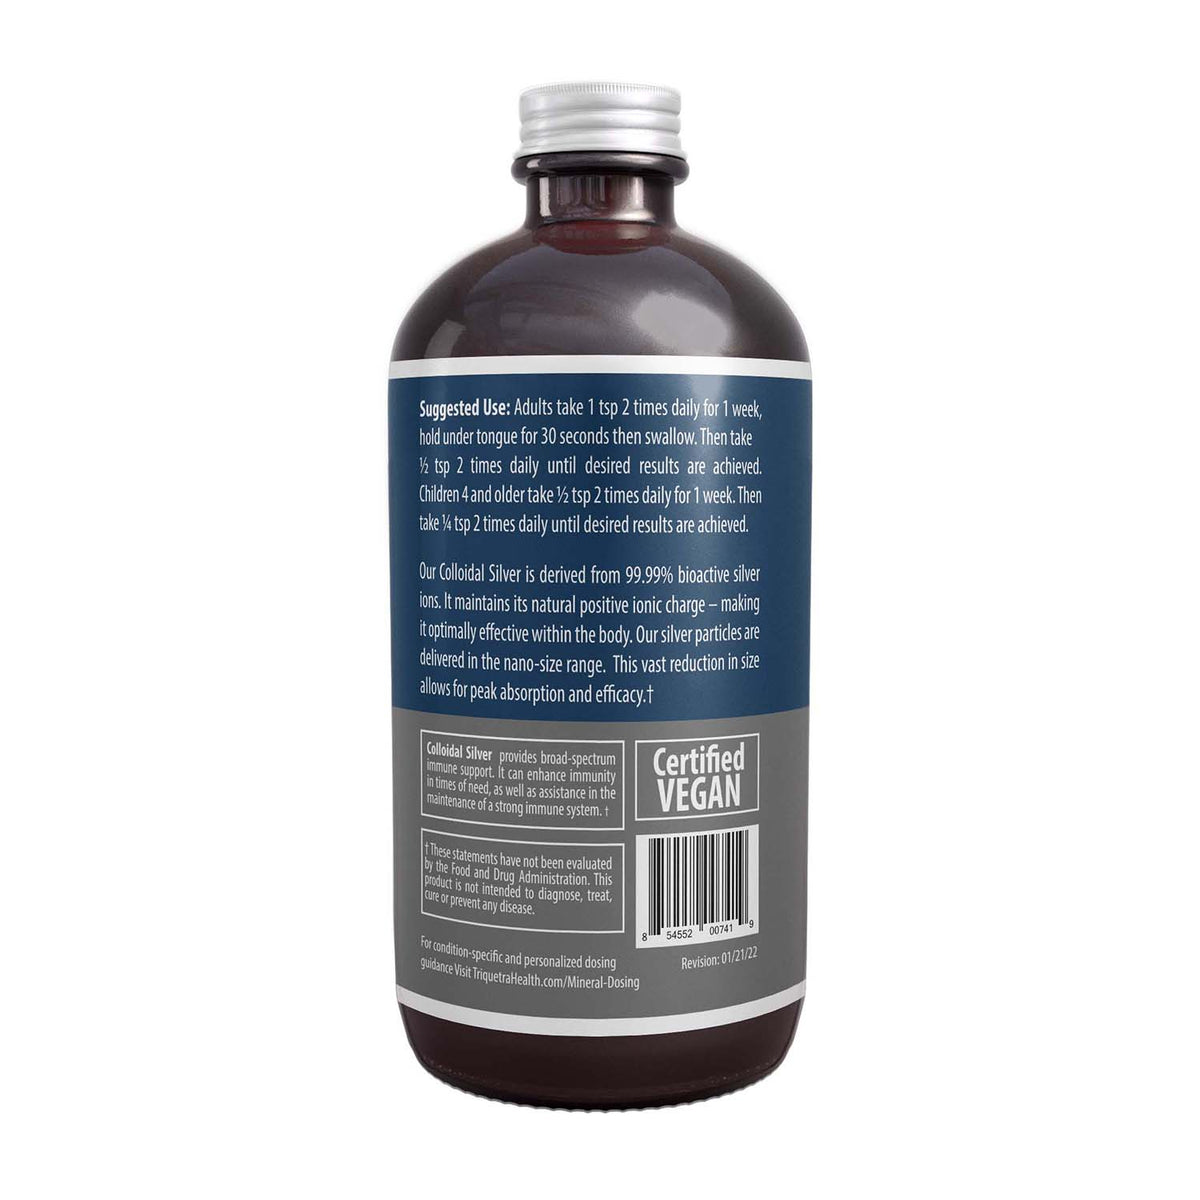 Colloidal Silver Liquid Supplement